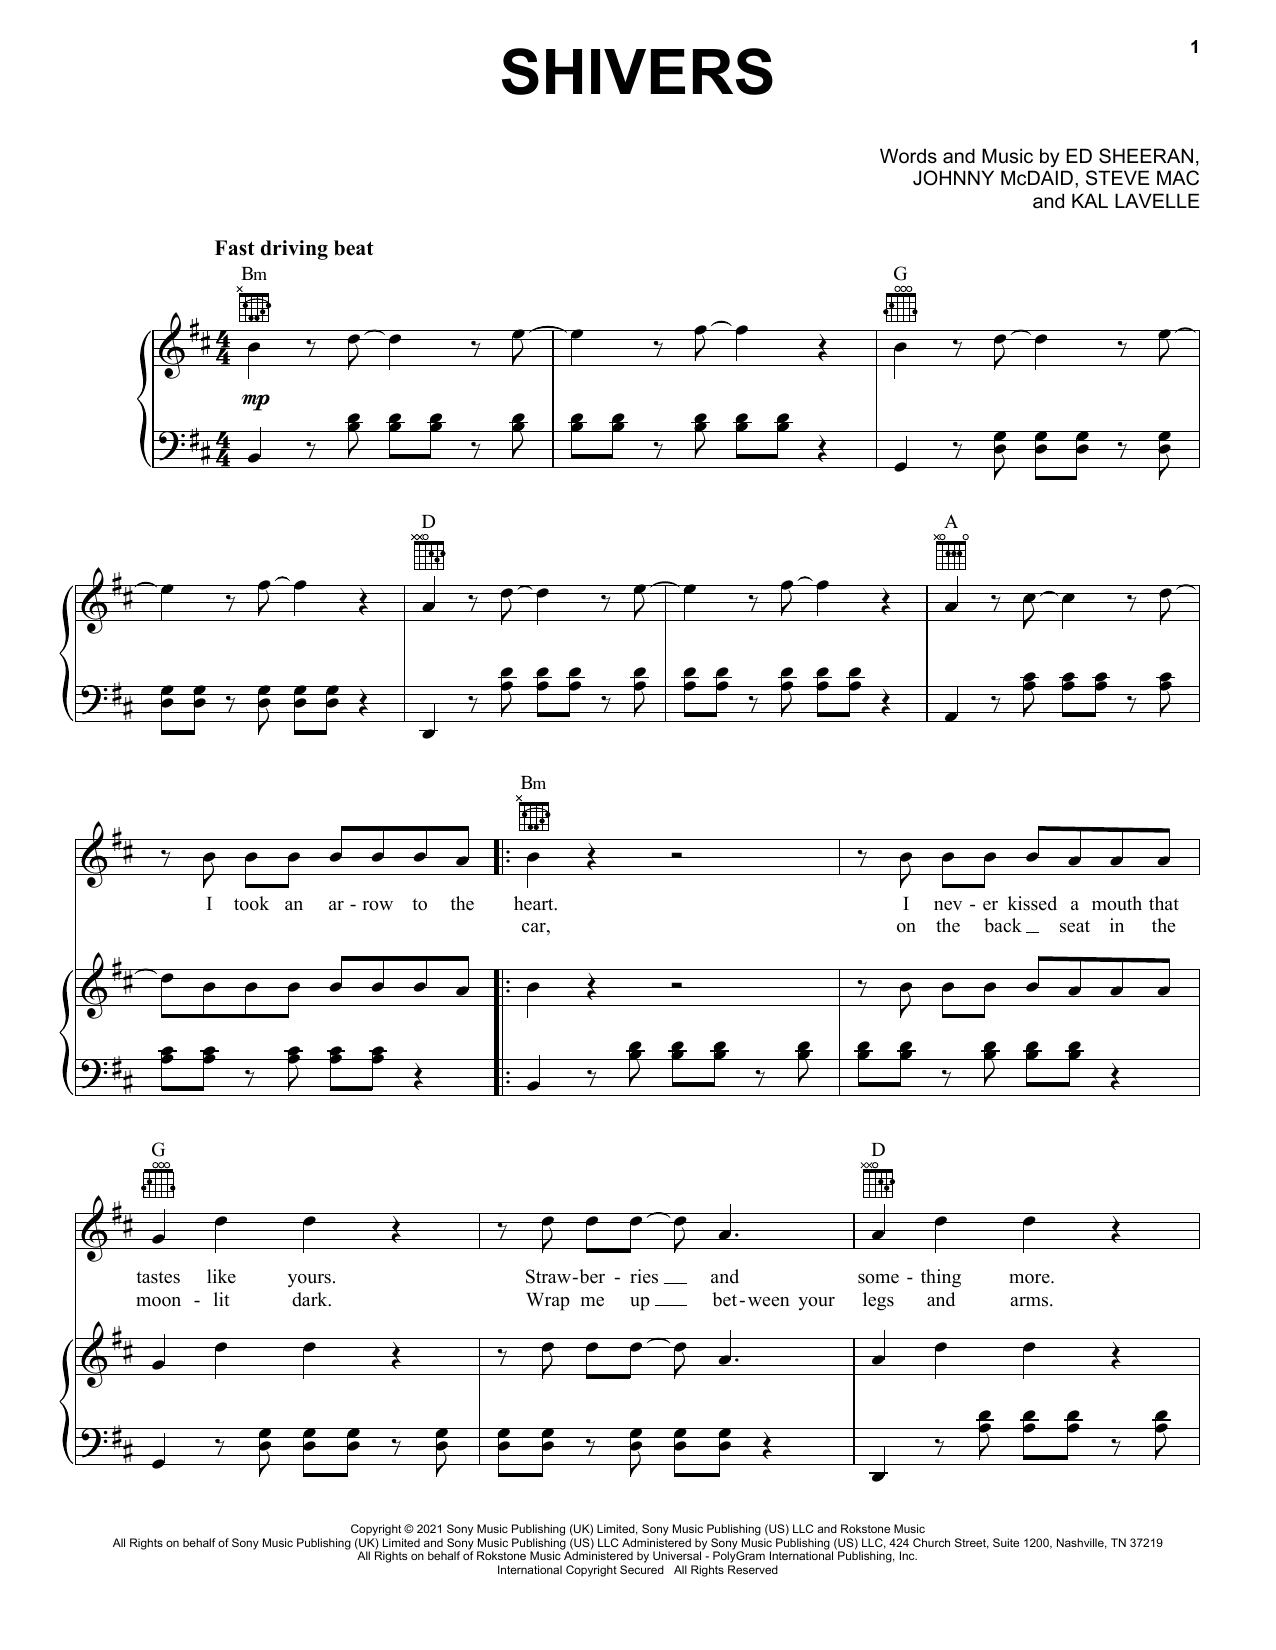 Ed Sheeran Shivers Sheet Music Notes & Chords for Ukulele - Download or Print PDF